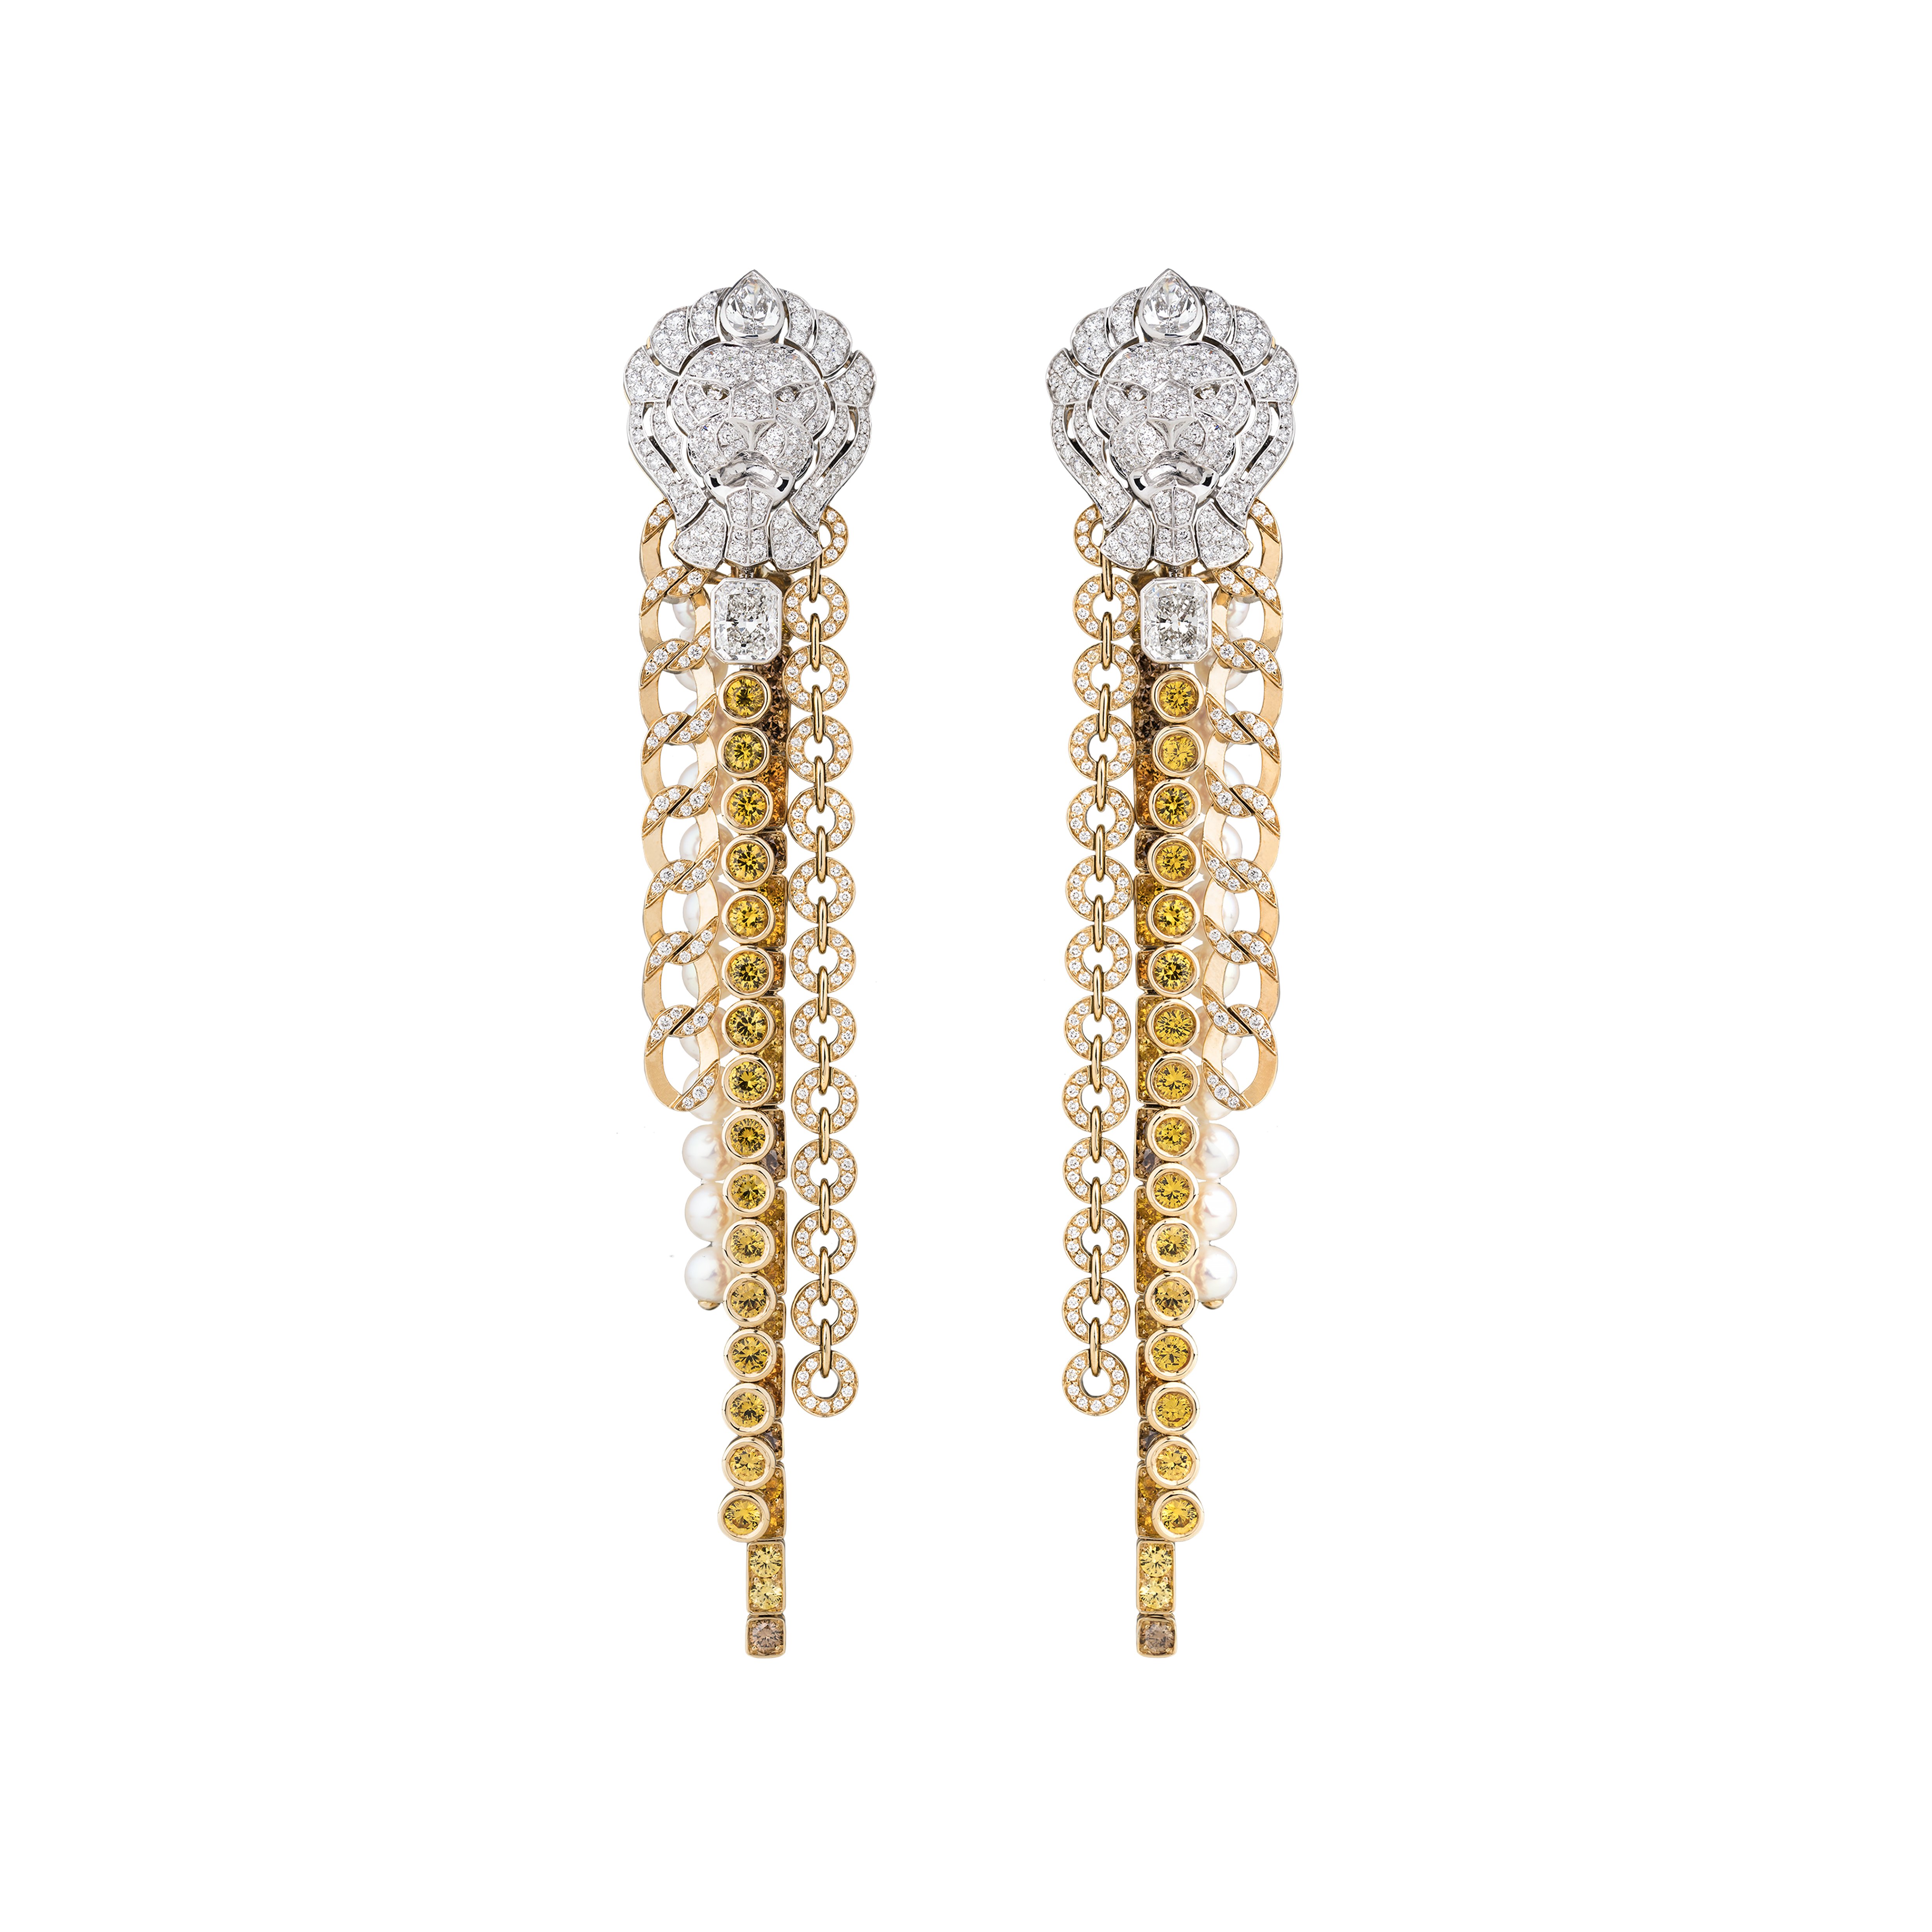 Chanel-Brillant-earrings-gold-diamond | Solitaire Magazine